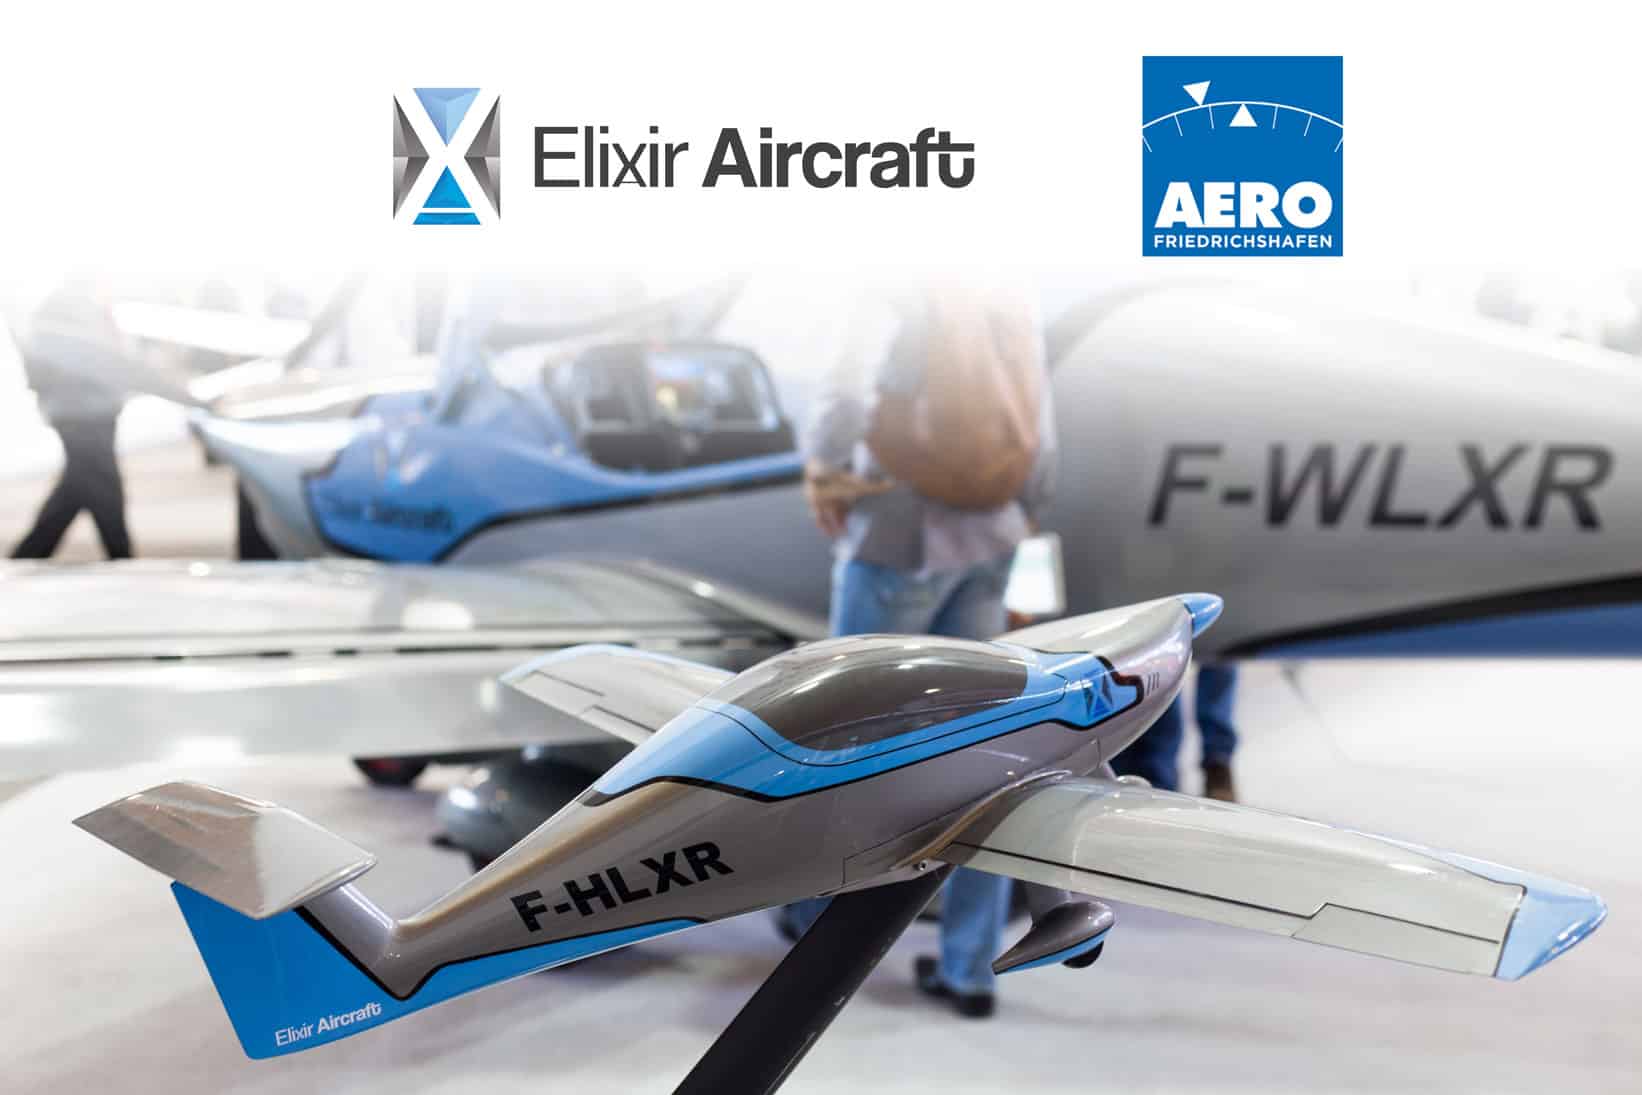 Elixir Aircraft at AERO Friedrichshafen